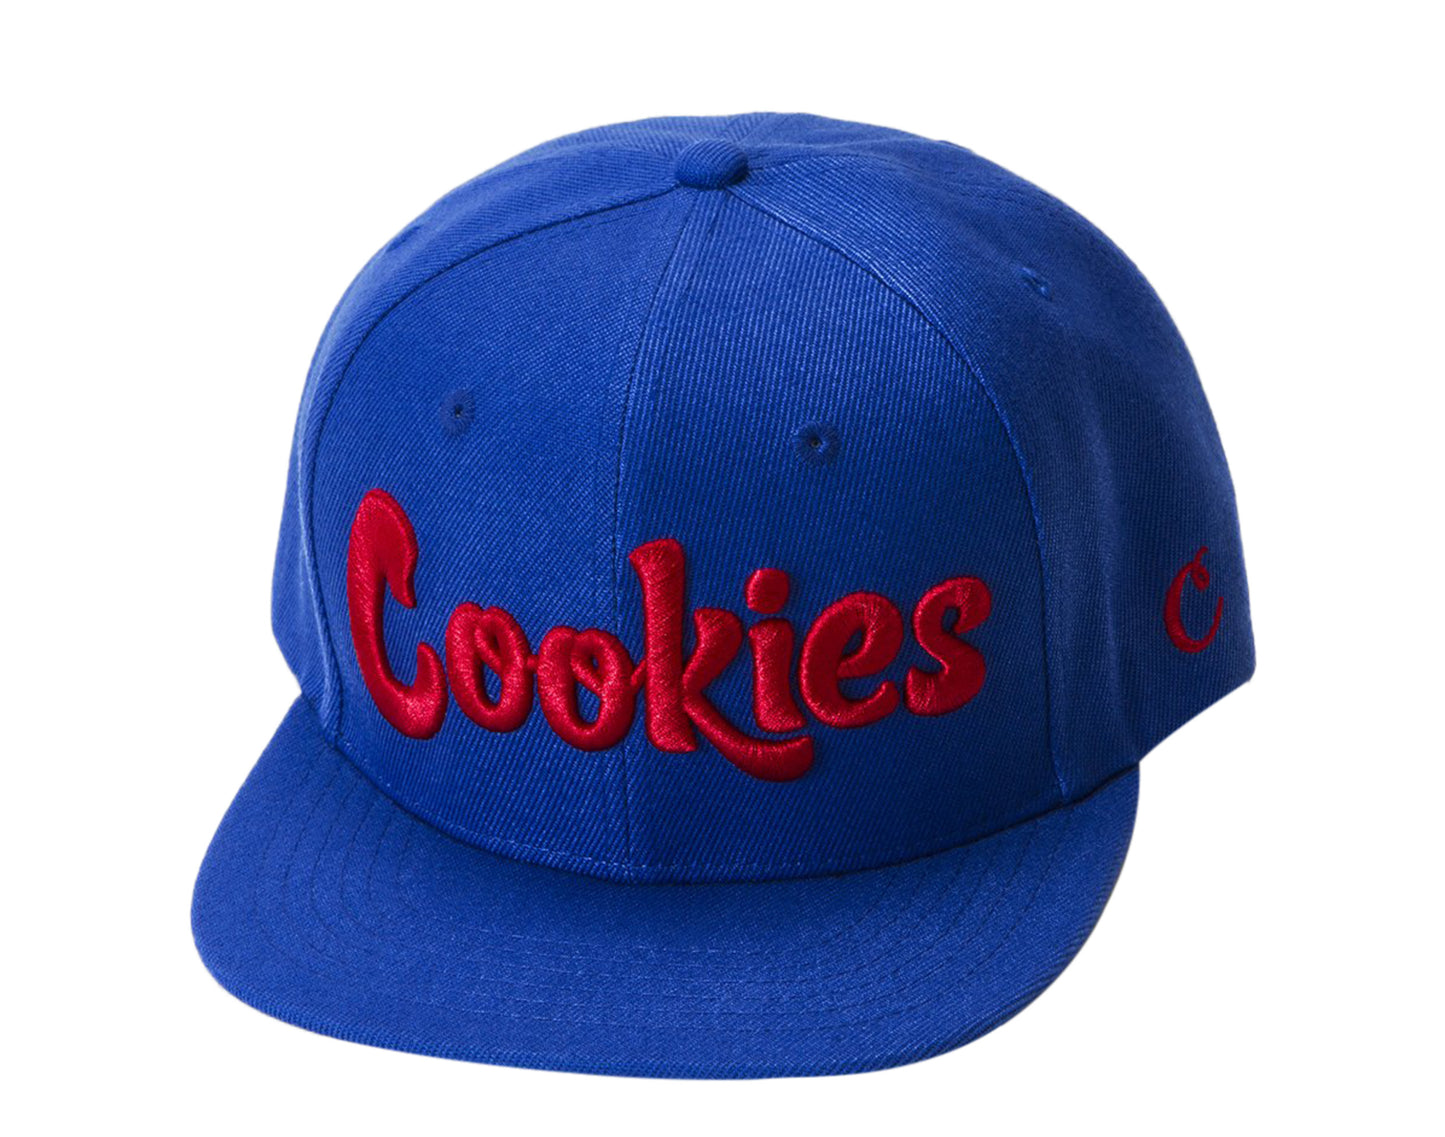 Cookies Original Logo Thin Mint Adjustable Royal/Red Snapback 1546X4391-RRD